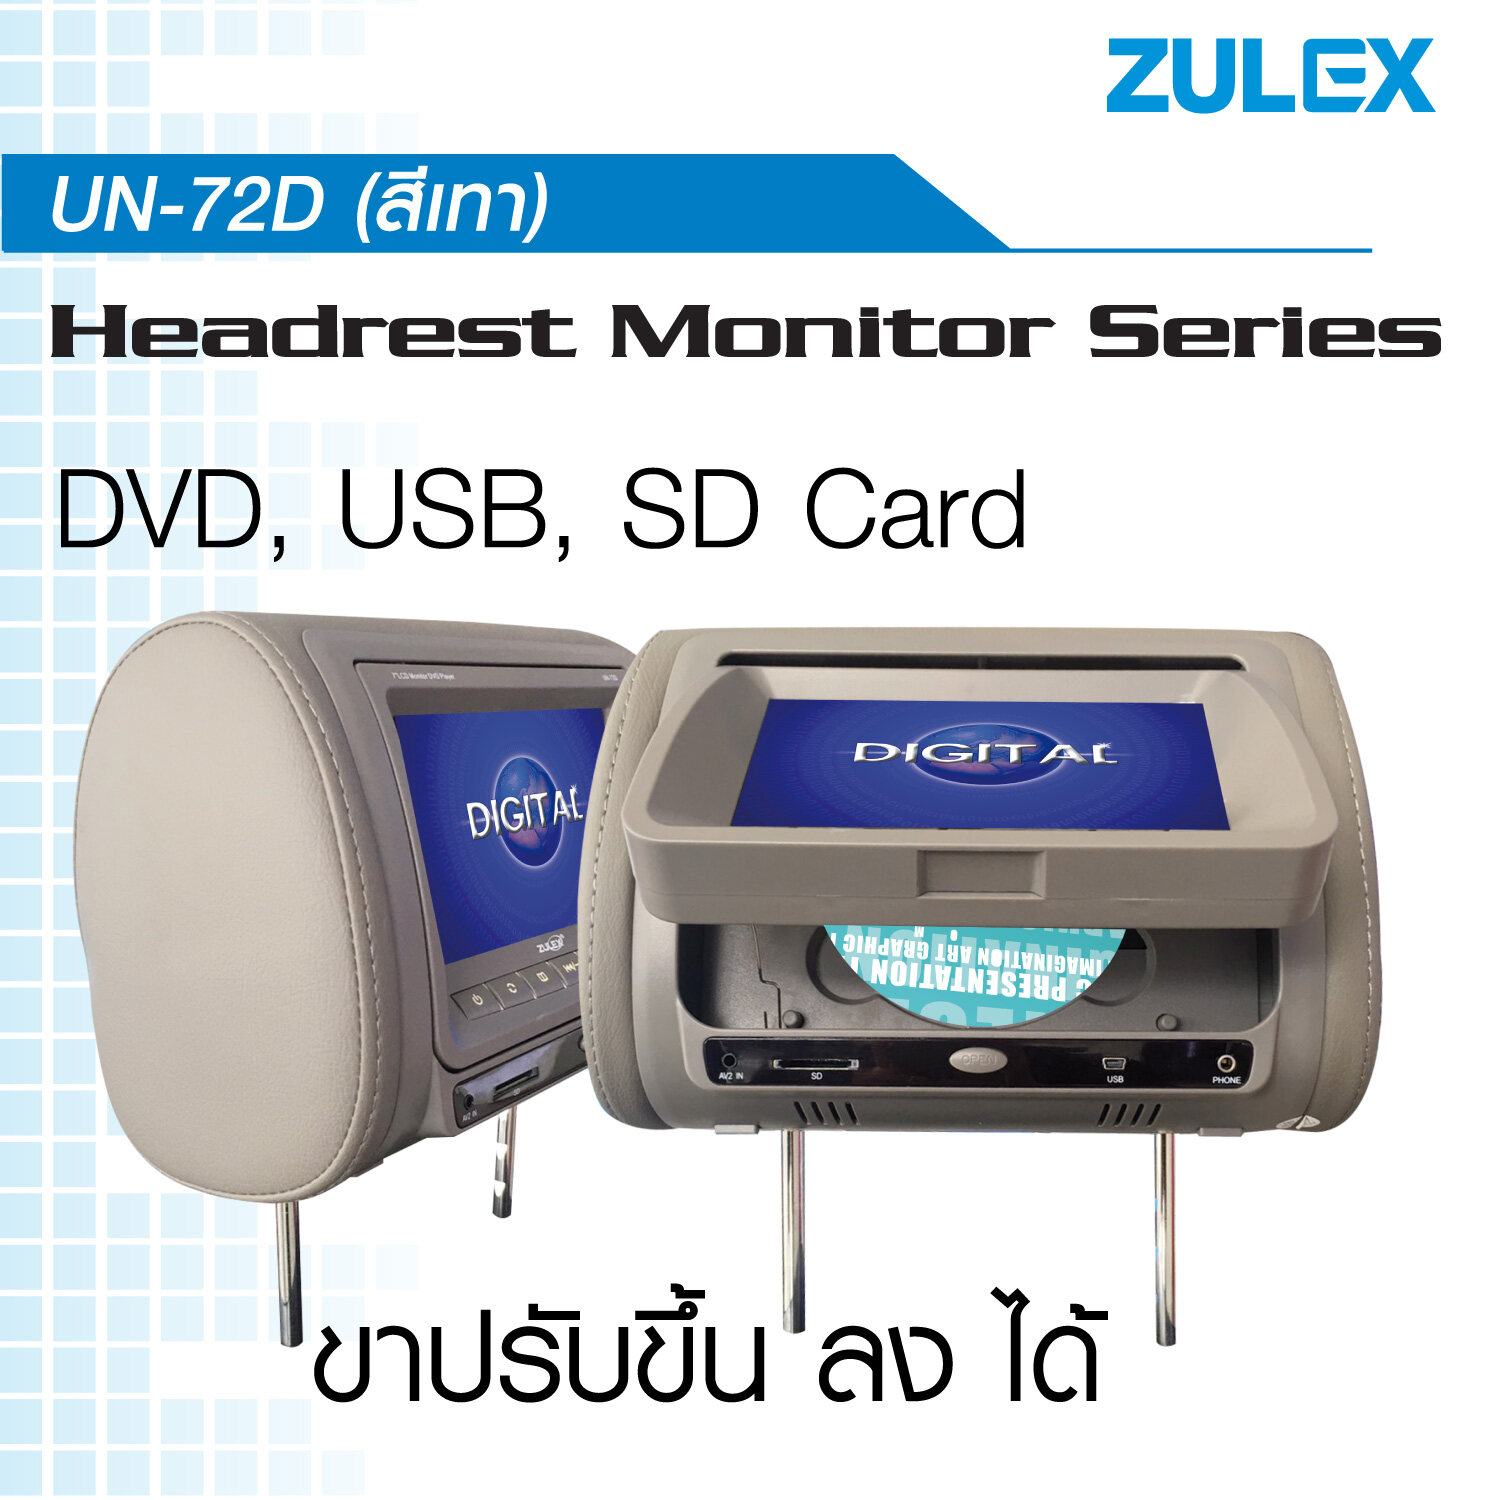 zulex จอฝังหมอนติดรถยนต์รุ่น HR-UN72D DVD, USB, SD Card  AUX IN, หูฟังF3.5จอภาพ digital  รองรับรถยนต์ได้ทุกรุ่นทุกยี่ห้อ